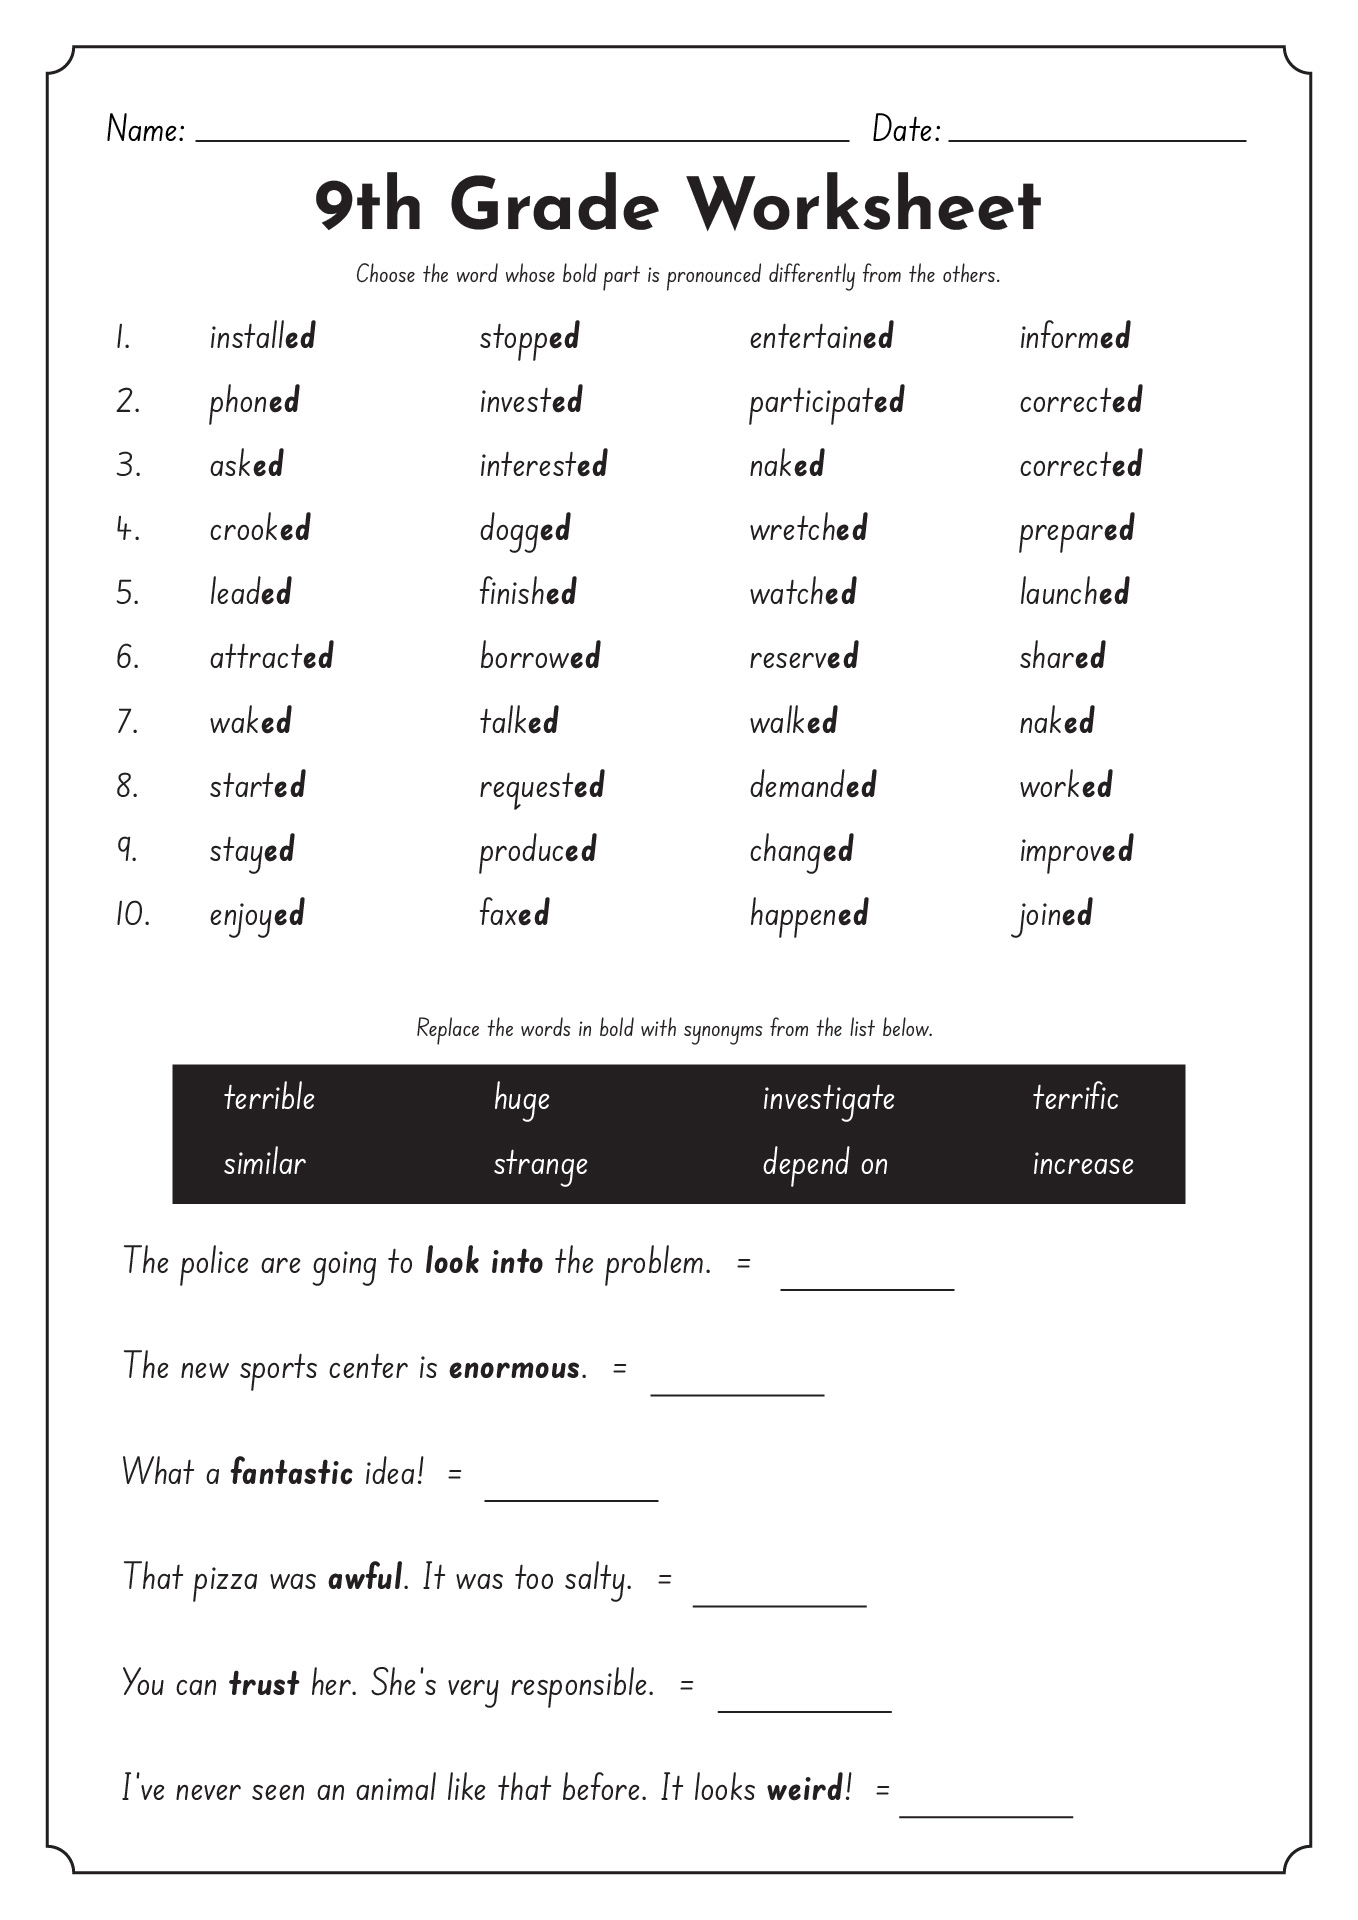 9th Grade Printable Worksheets Image